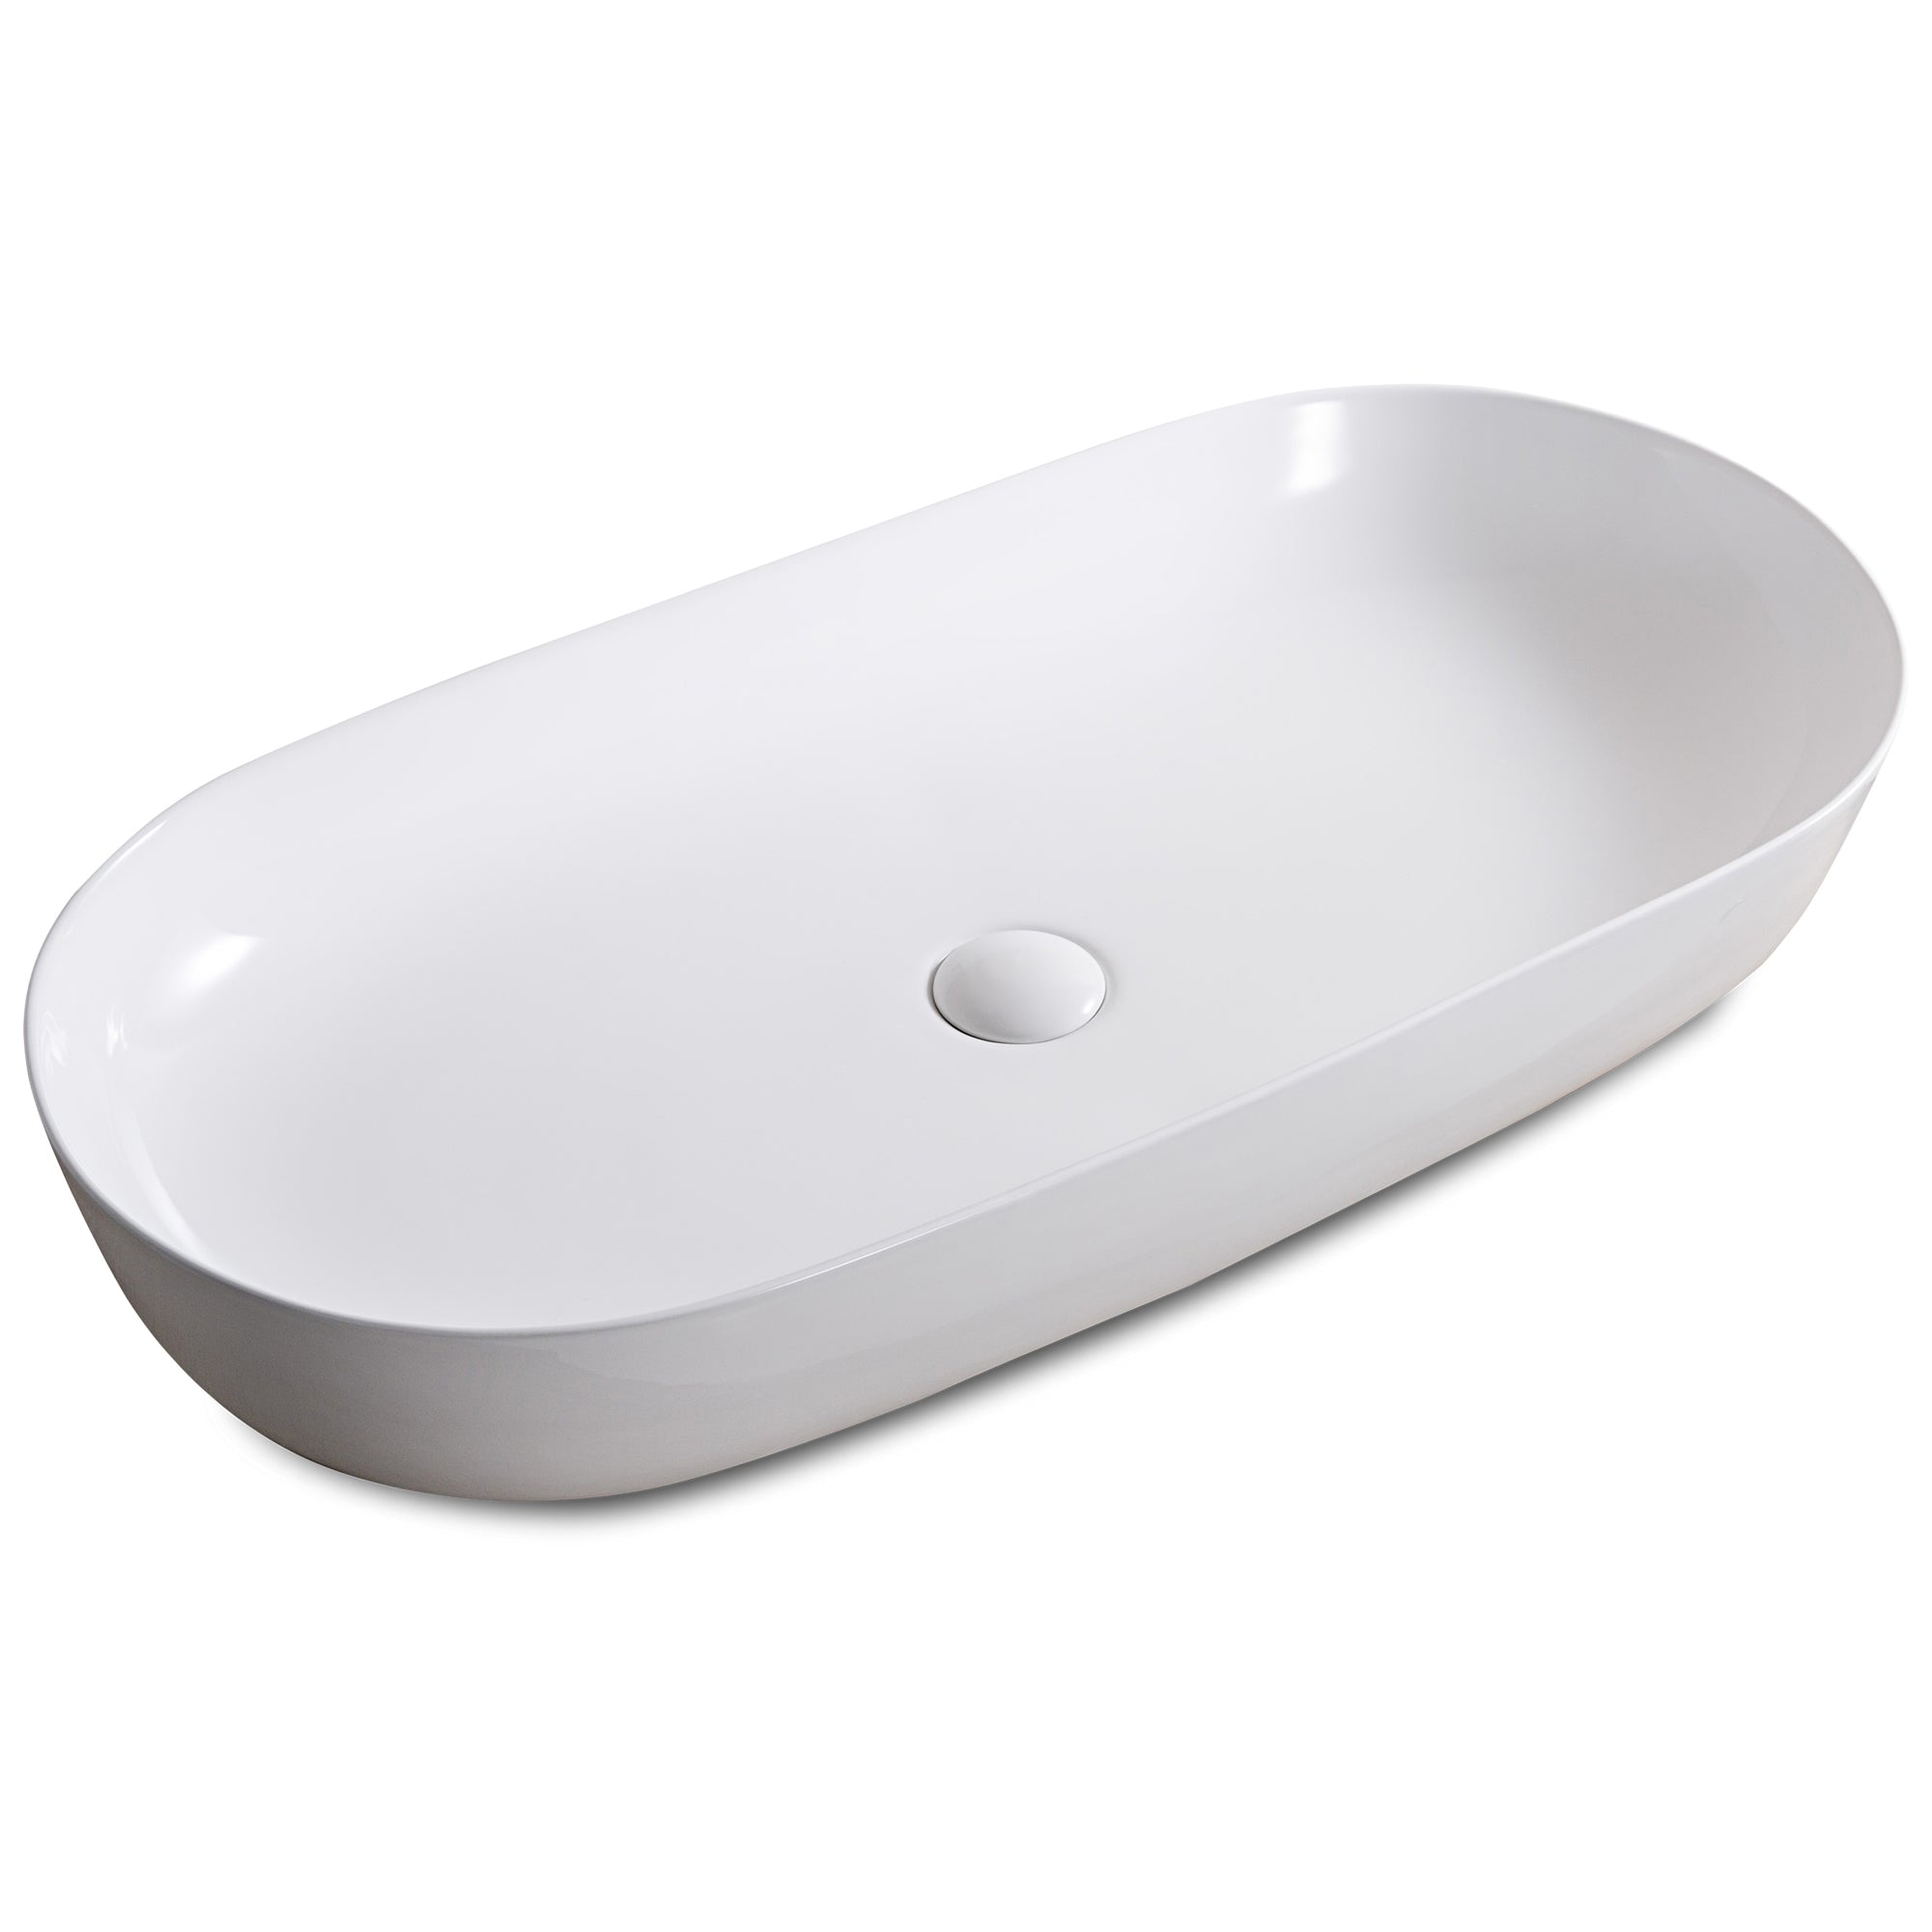 Ruvati 32" x 16" Oval Bathroom Vessel Sink in White